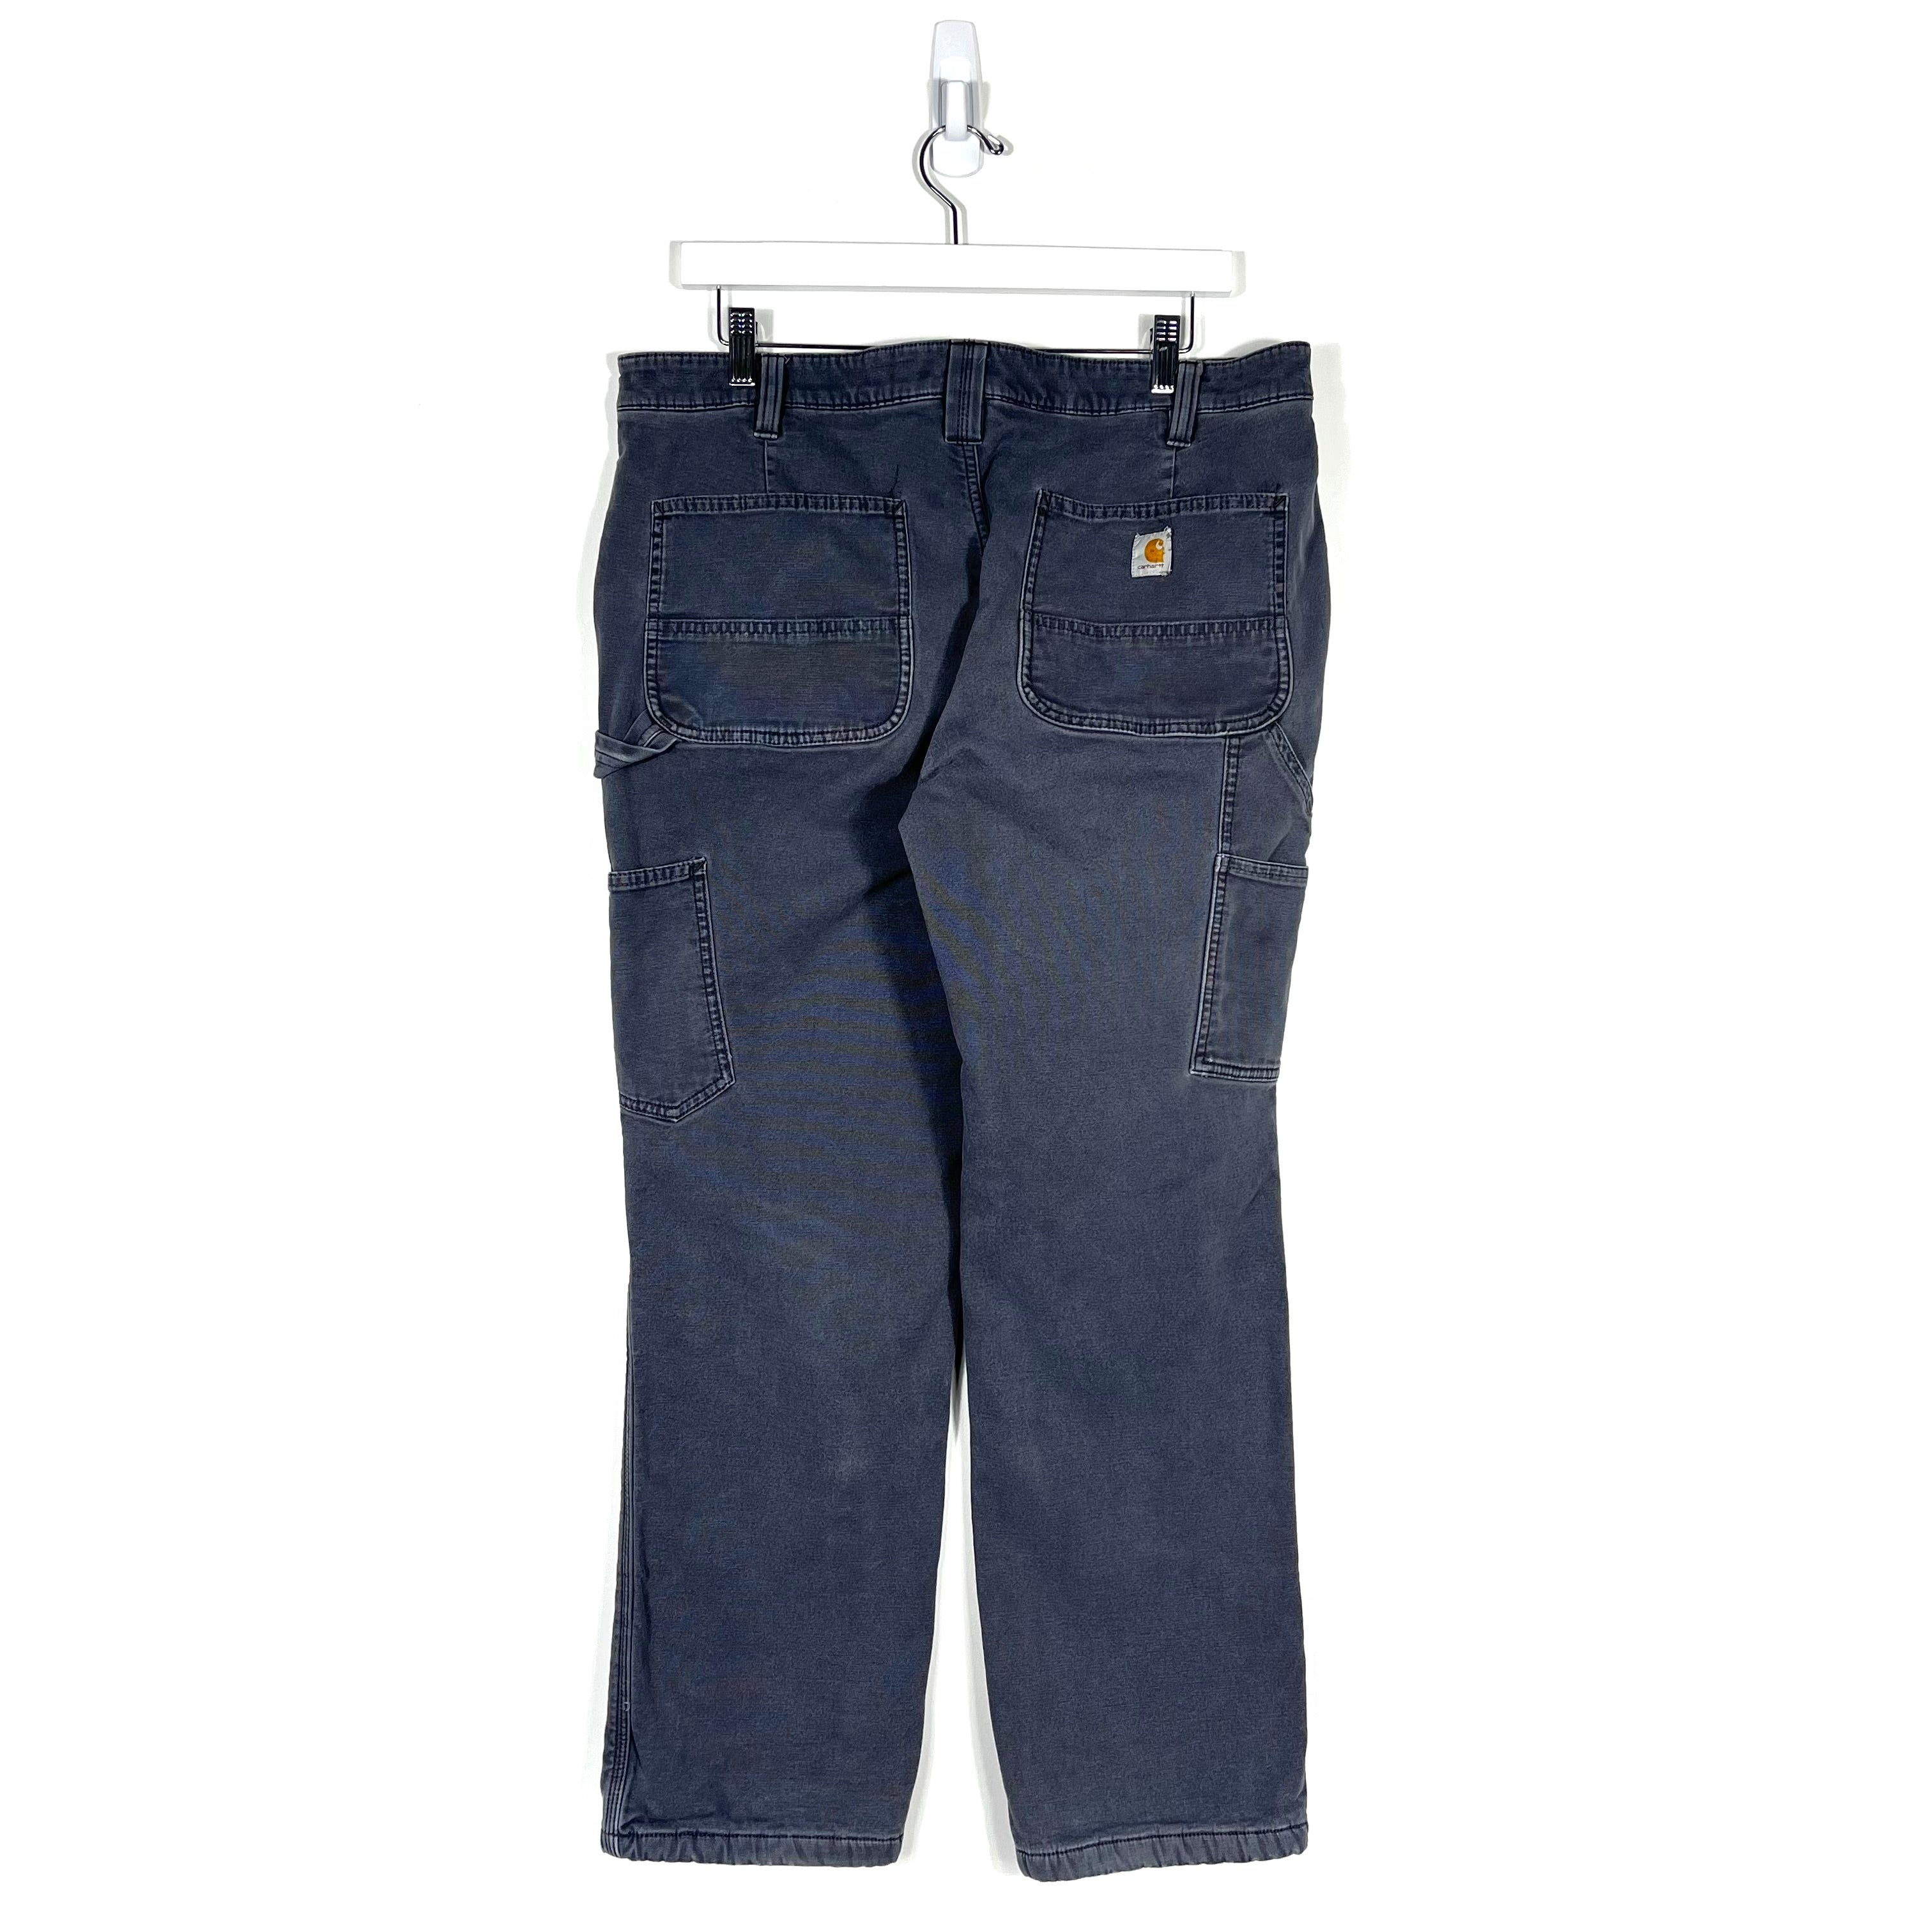 Vintage Carhartt Carpenter Jeans - Men's 36/30